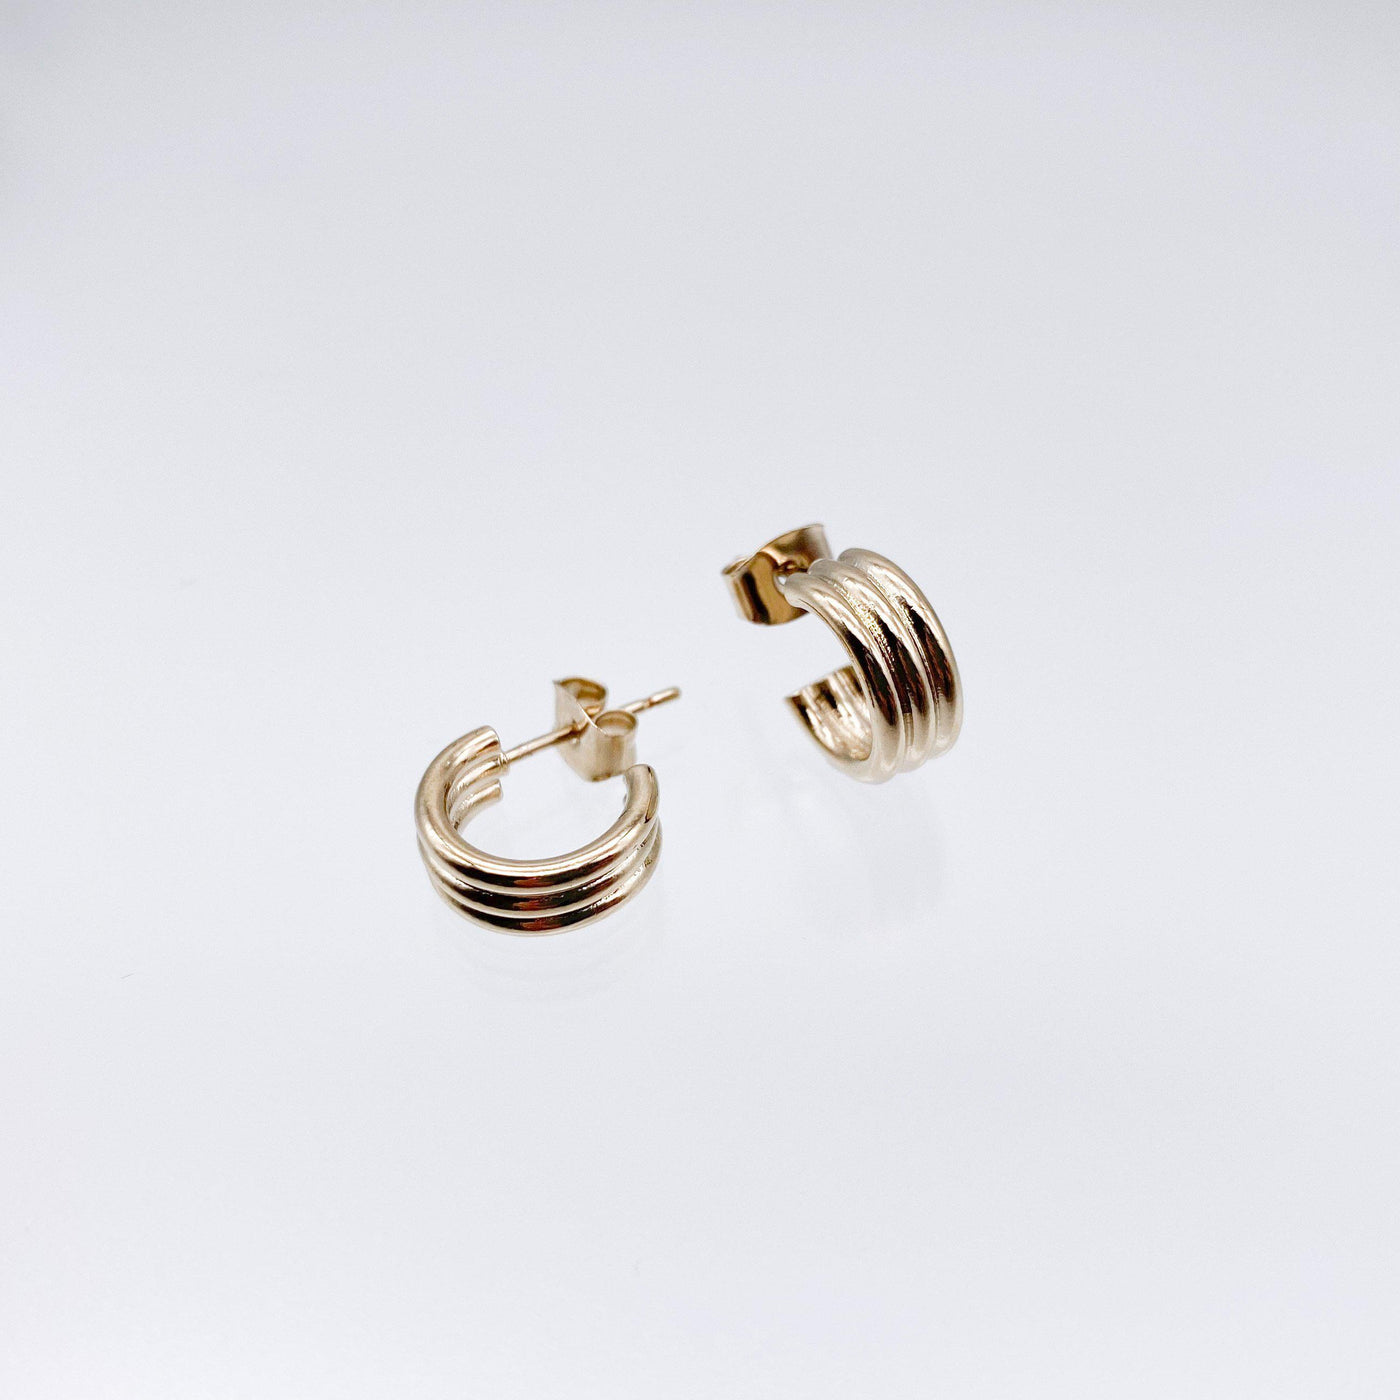 Sarah gold earrings-pierced earring-Justine Clenquet-unigem